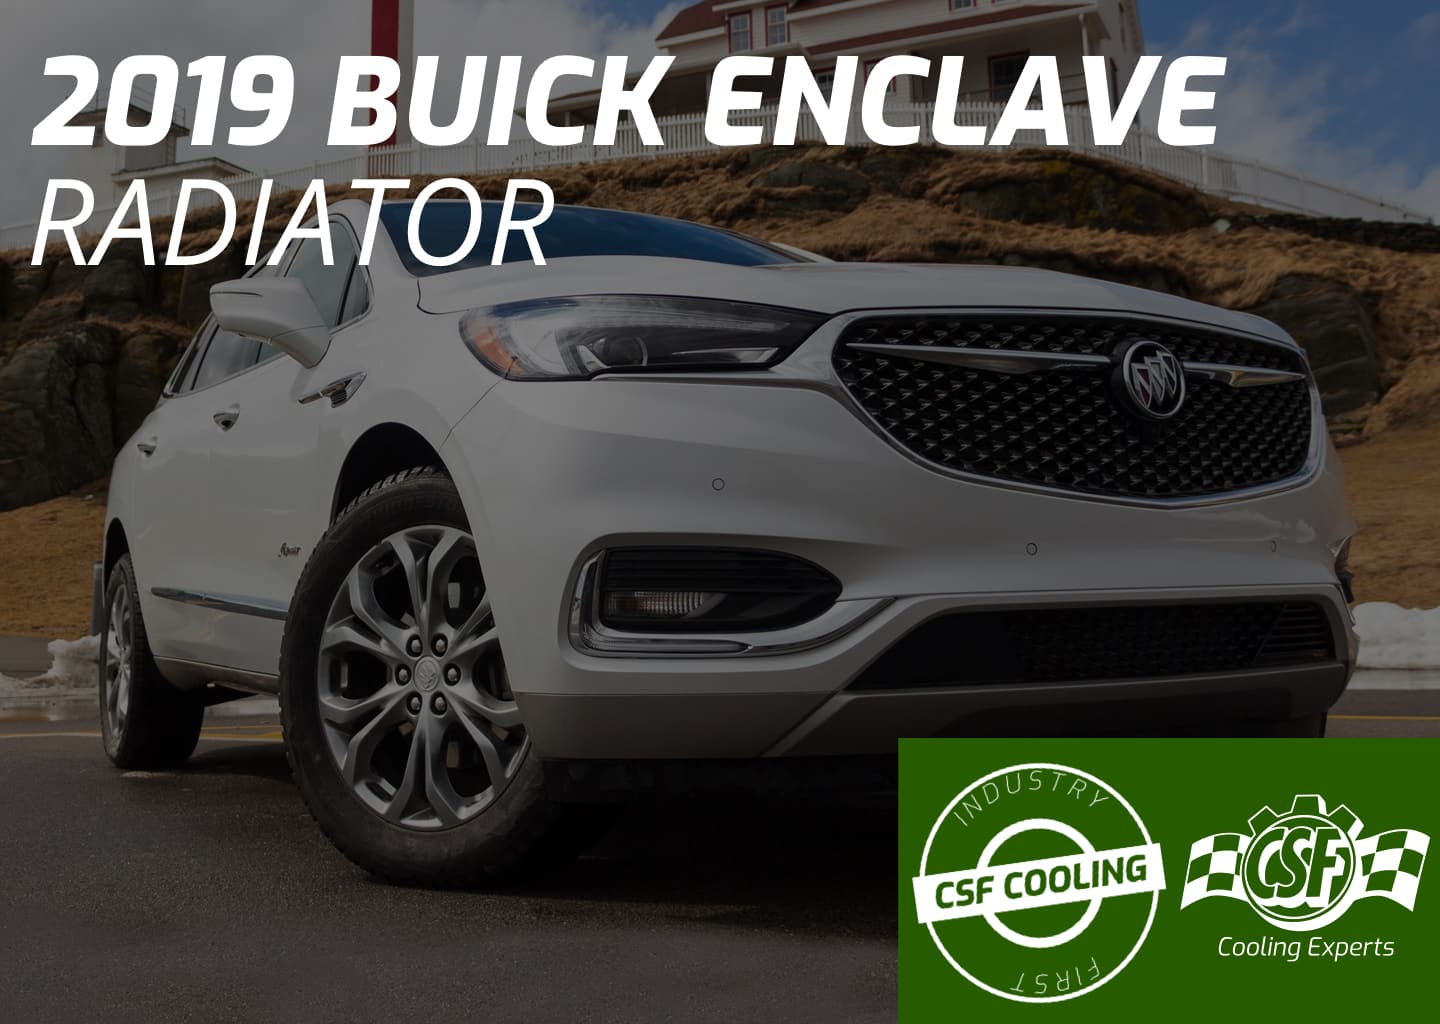 2019 Buick Enclave Radiator